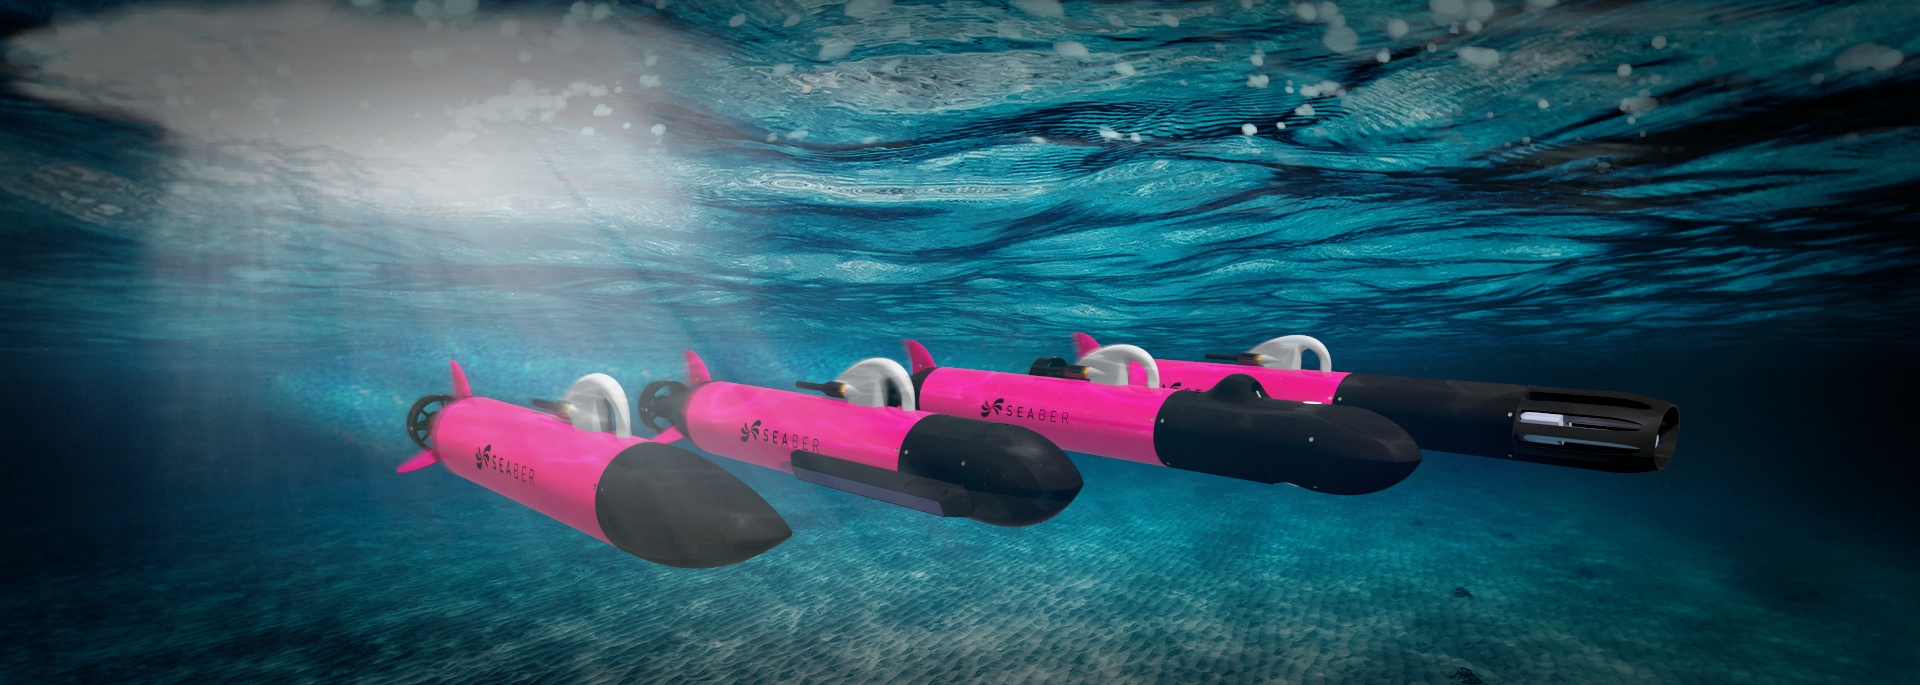 Unmanned underwater vehicles UUV seaber yuco 